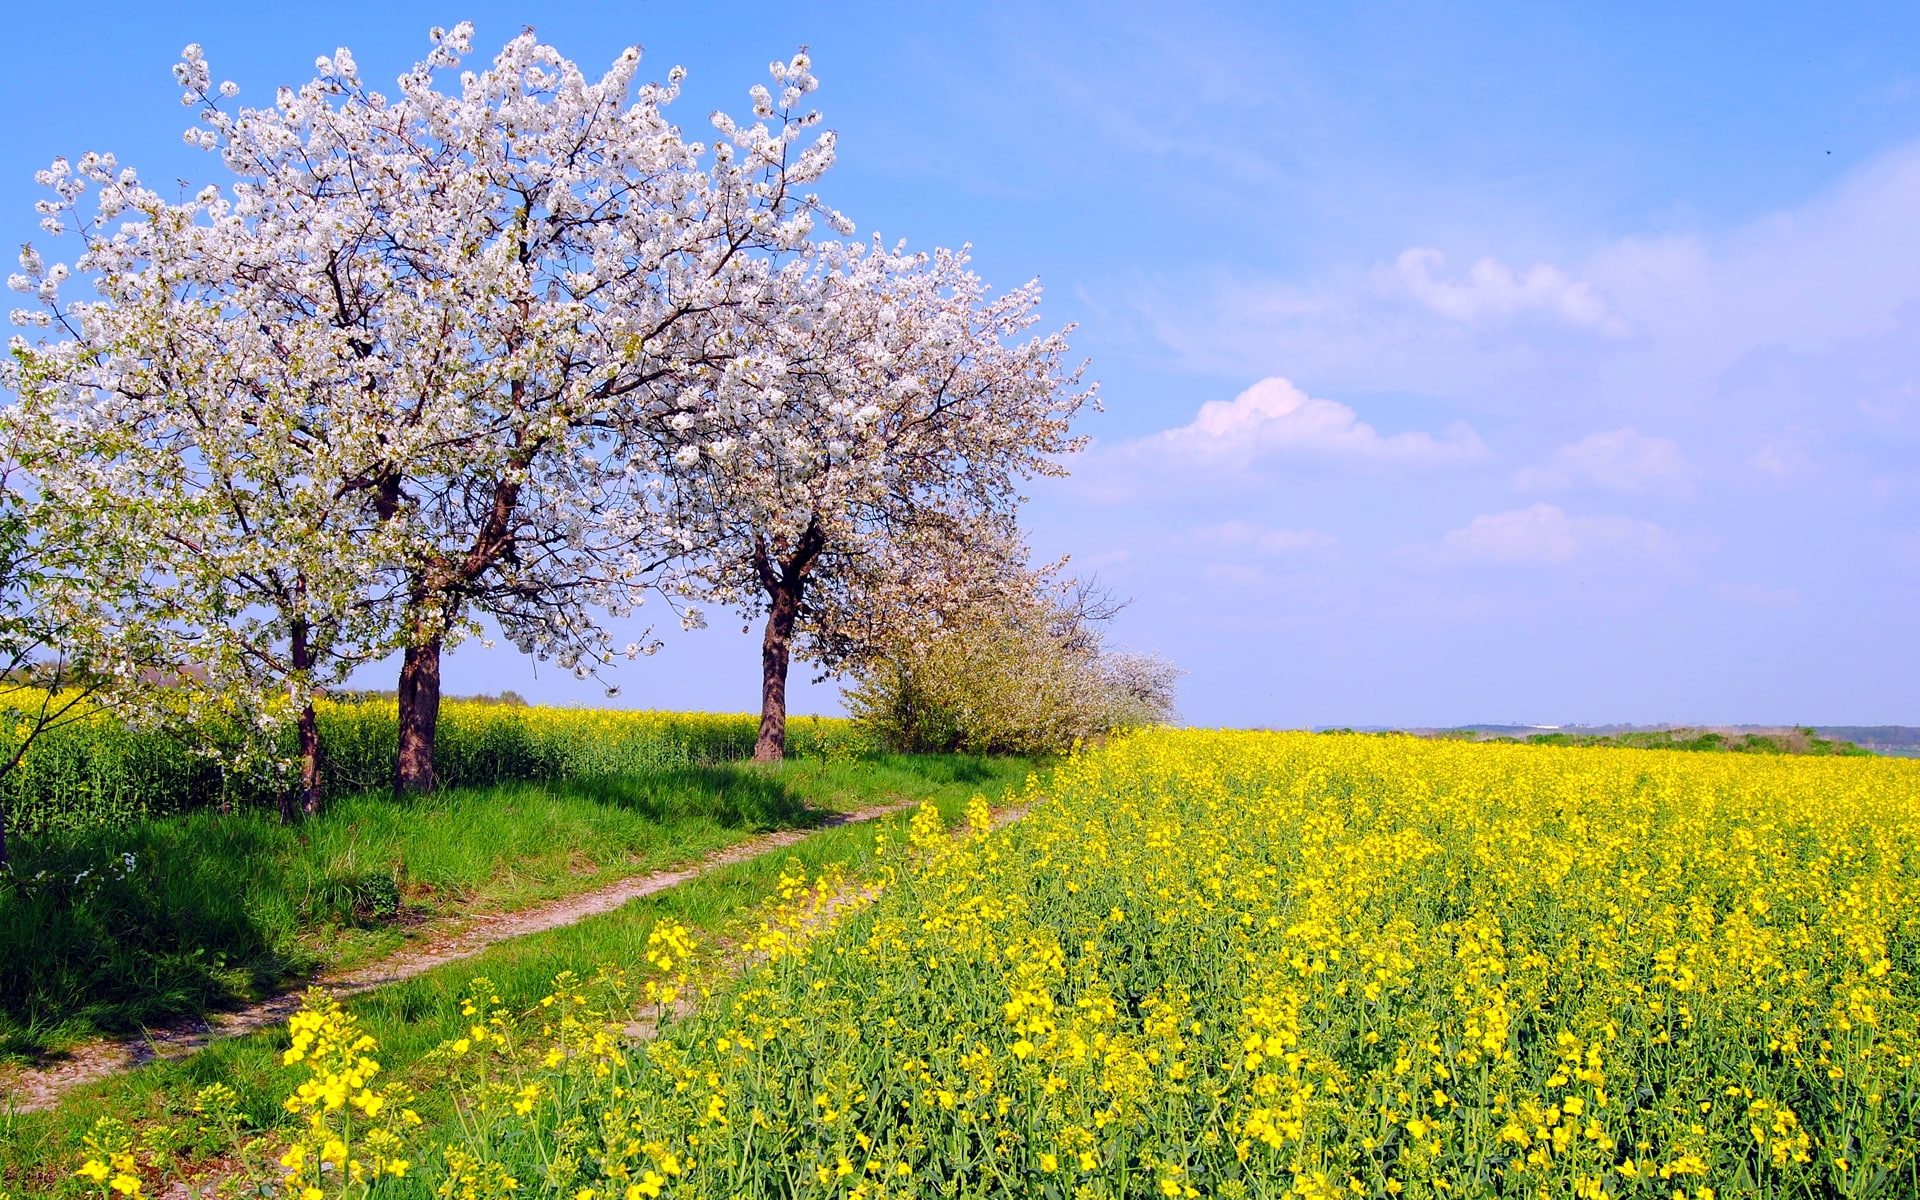 Germany spring nature scenery, fields, flowers, blue sky, yellow rapeseed field